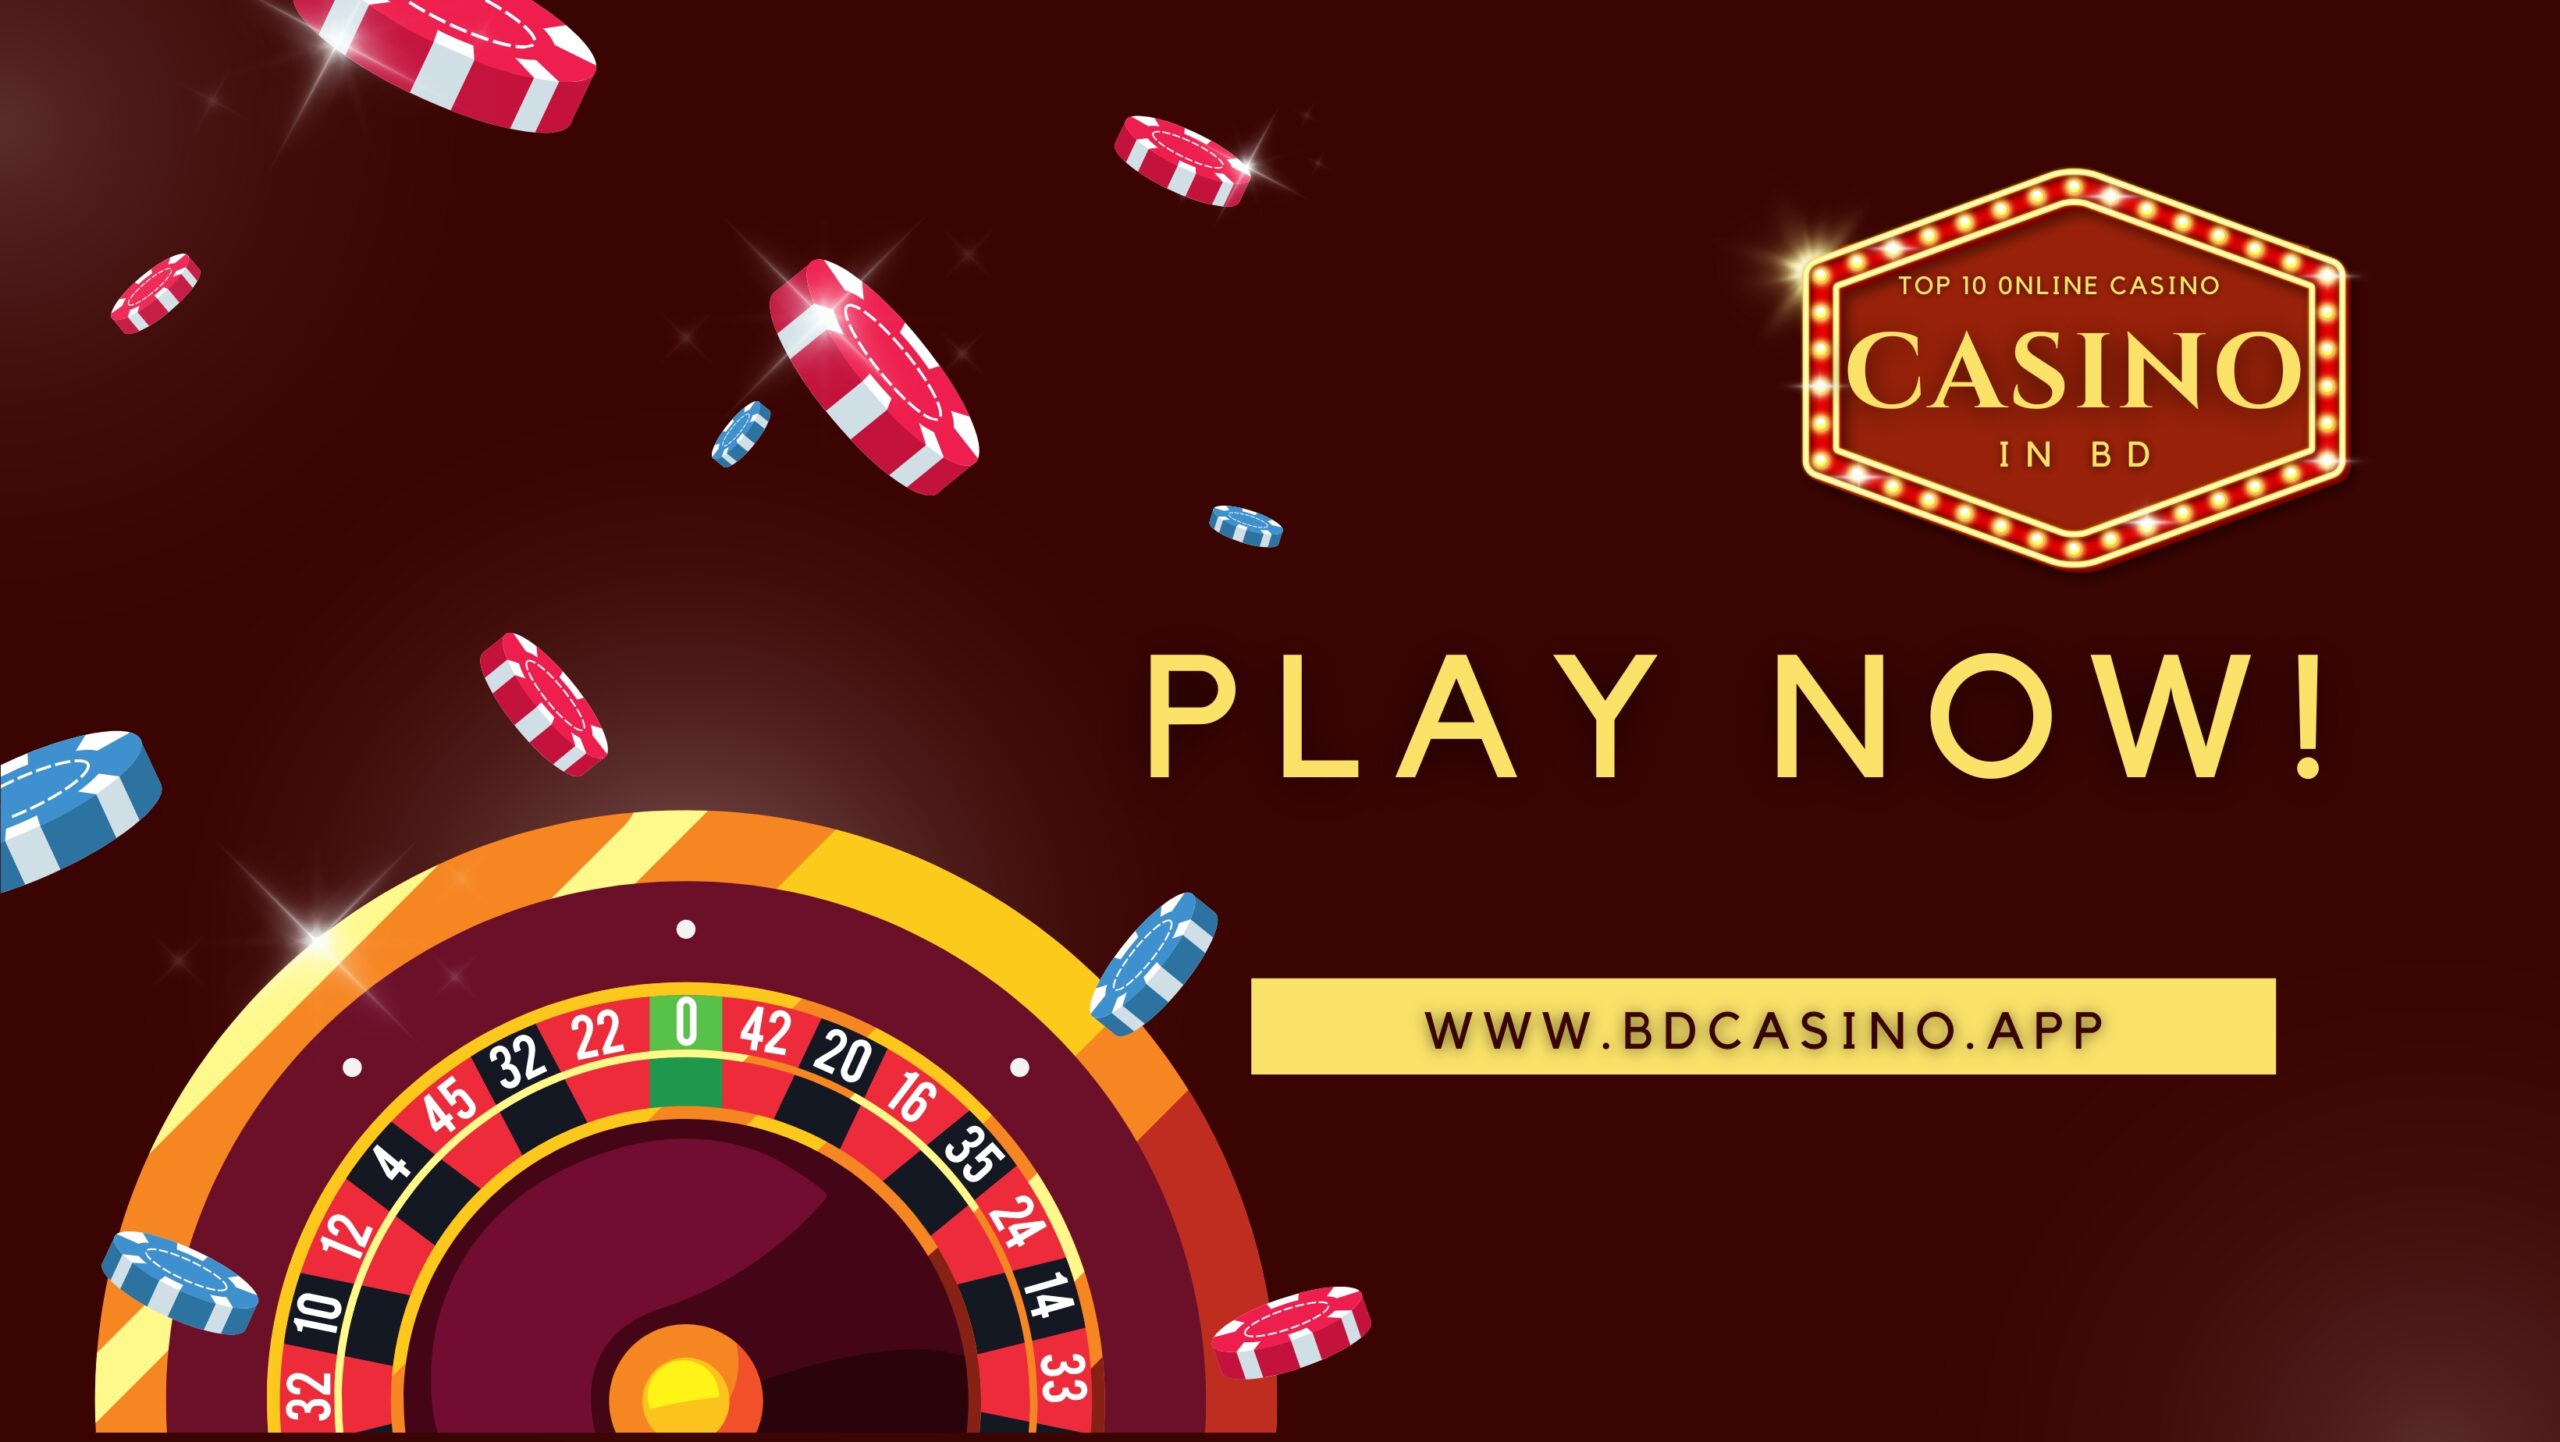 Top 10 casino apps image